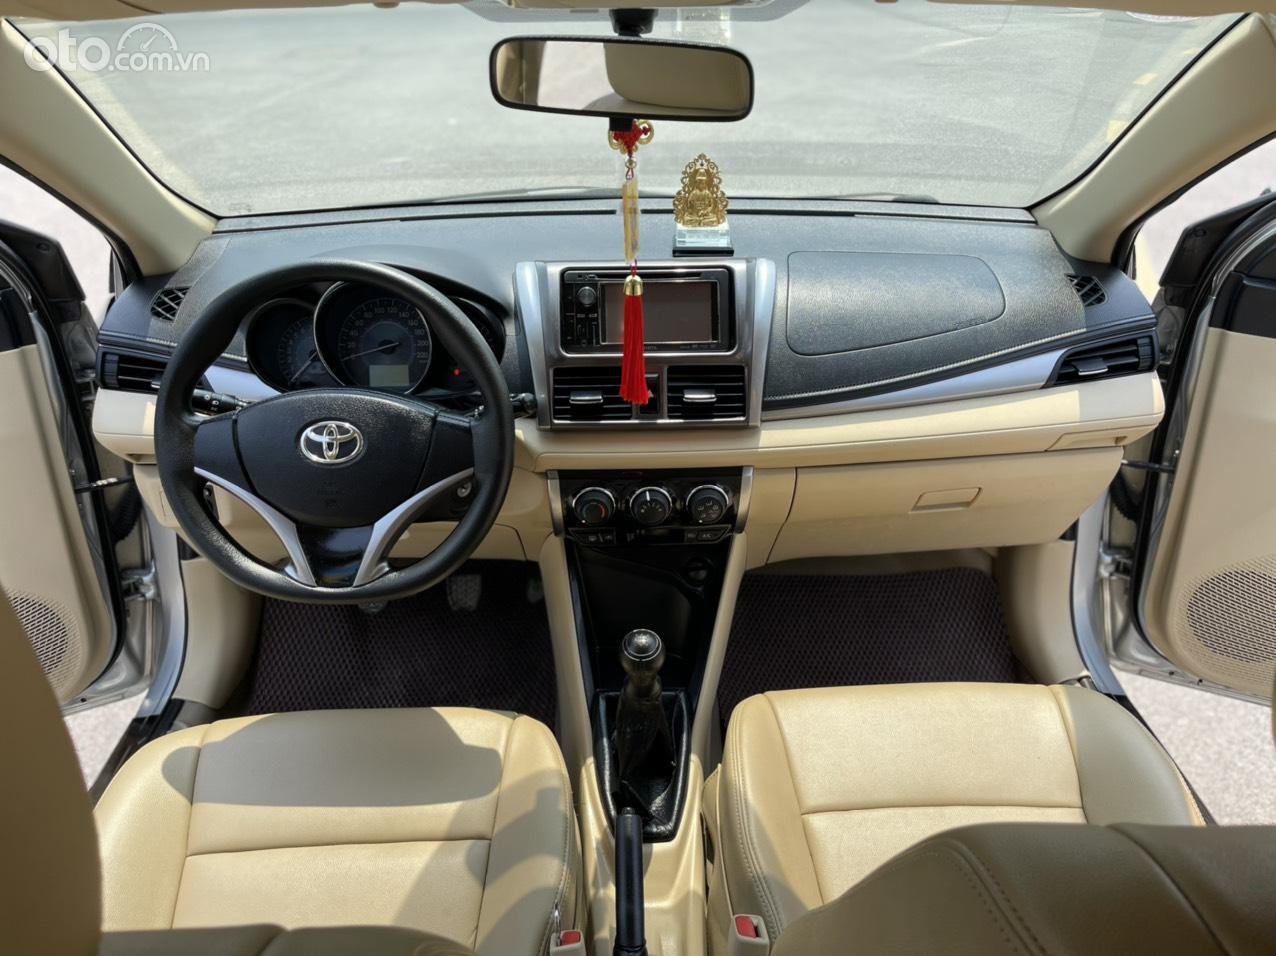 Nội thất Toyota Vios 2016.